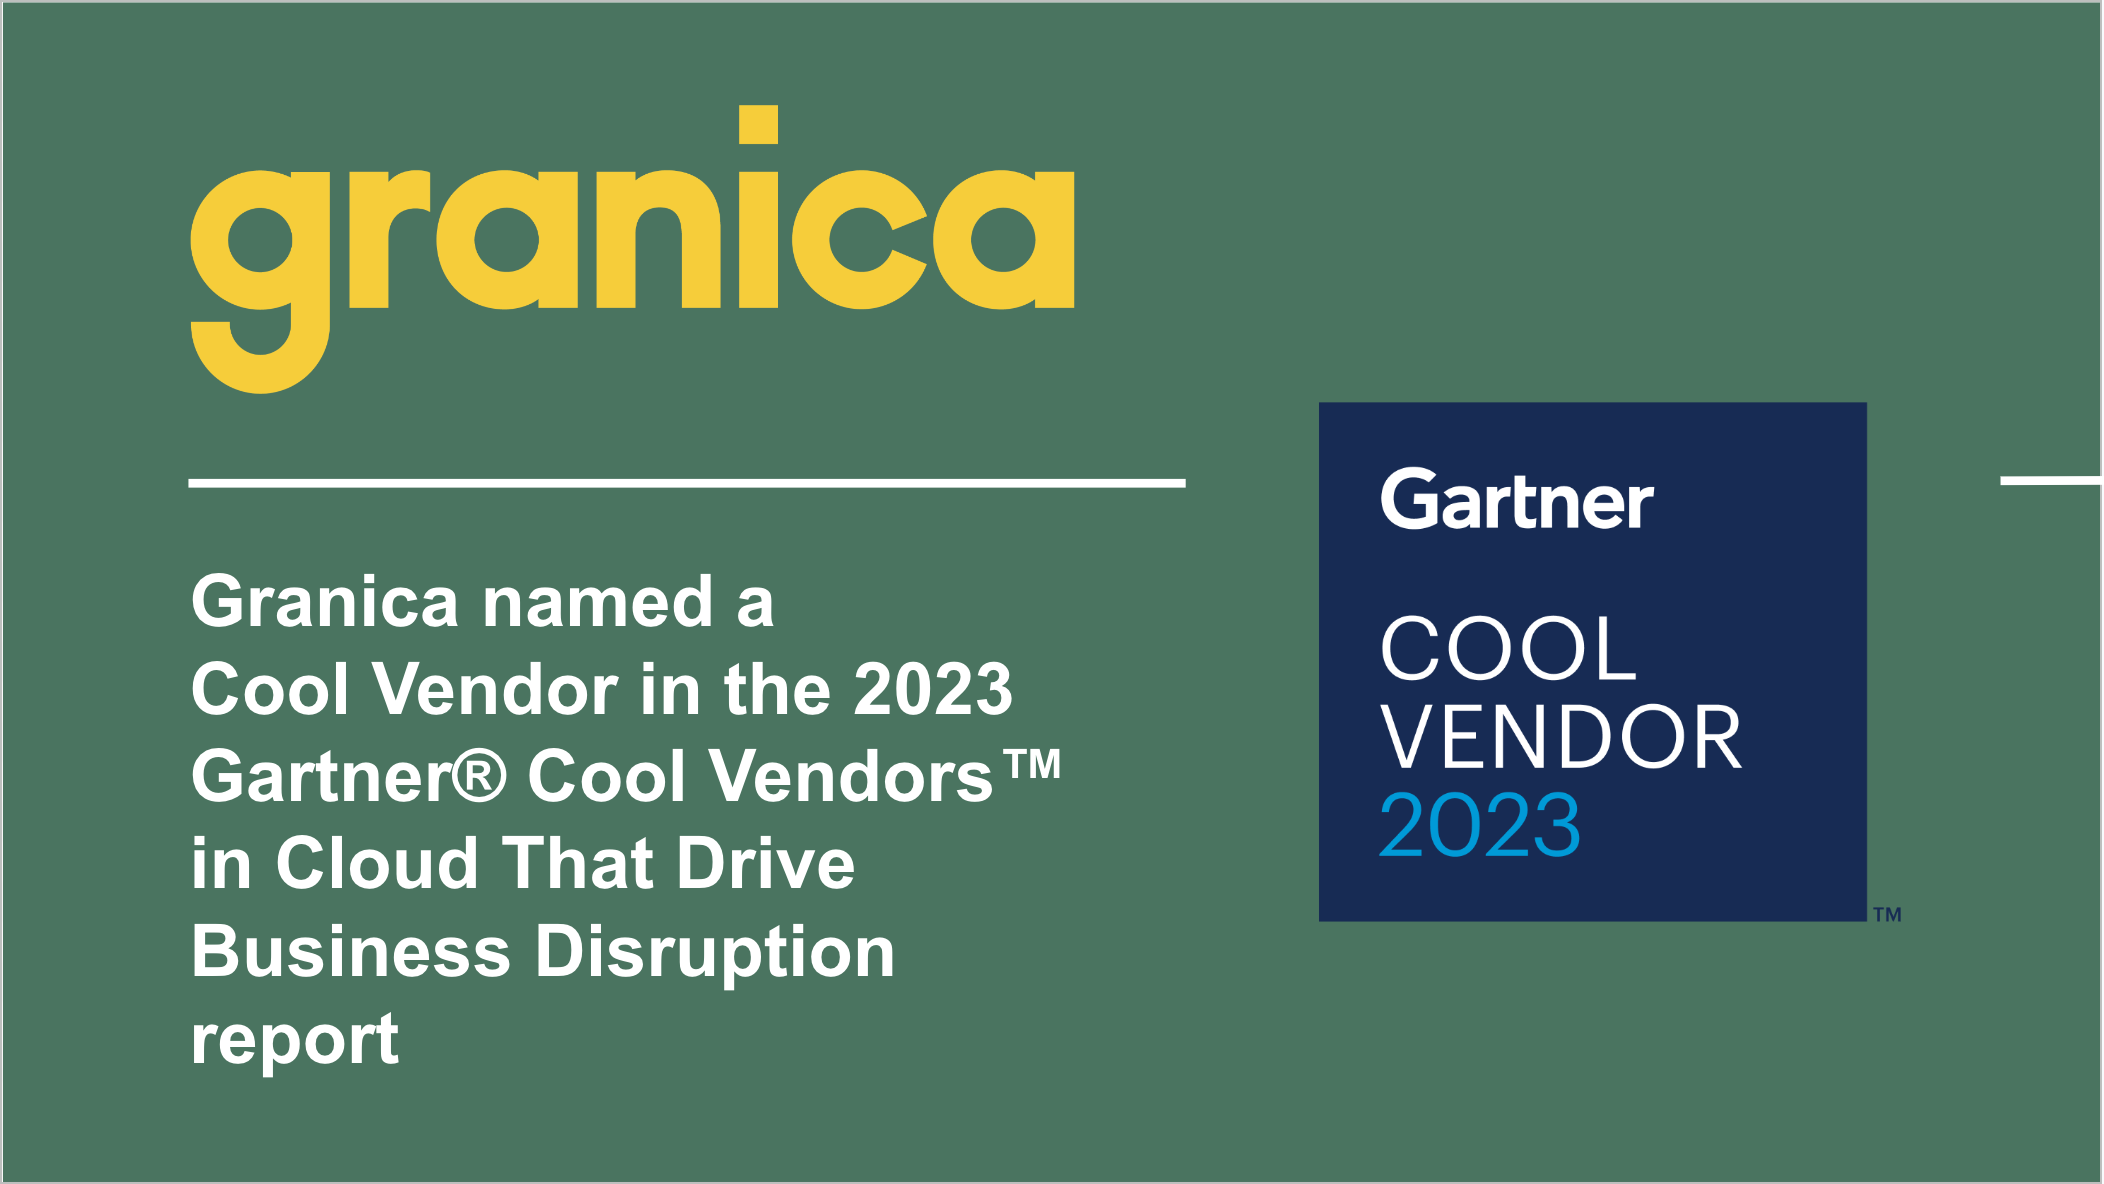 Granica Named a 2023 Cool Vendor by Gartner®